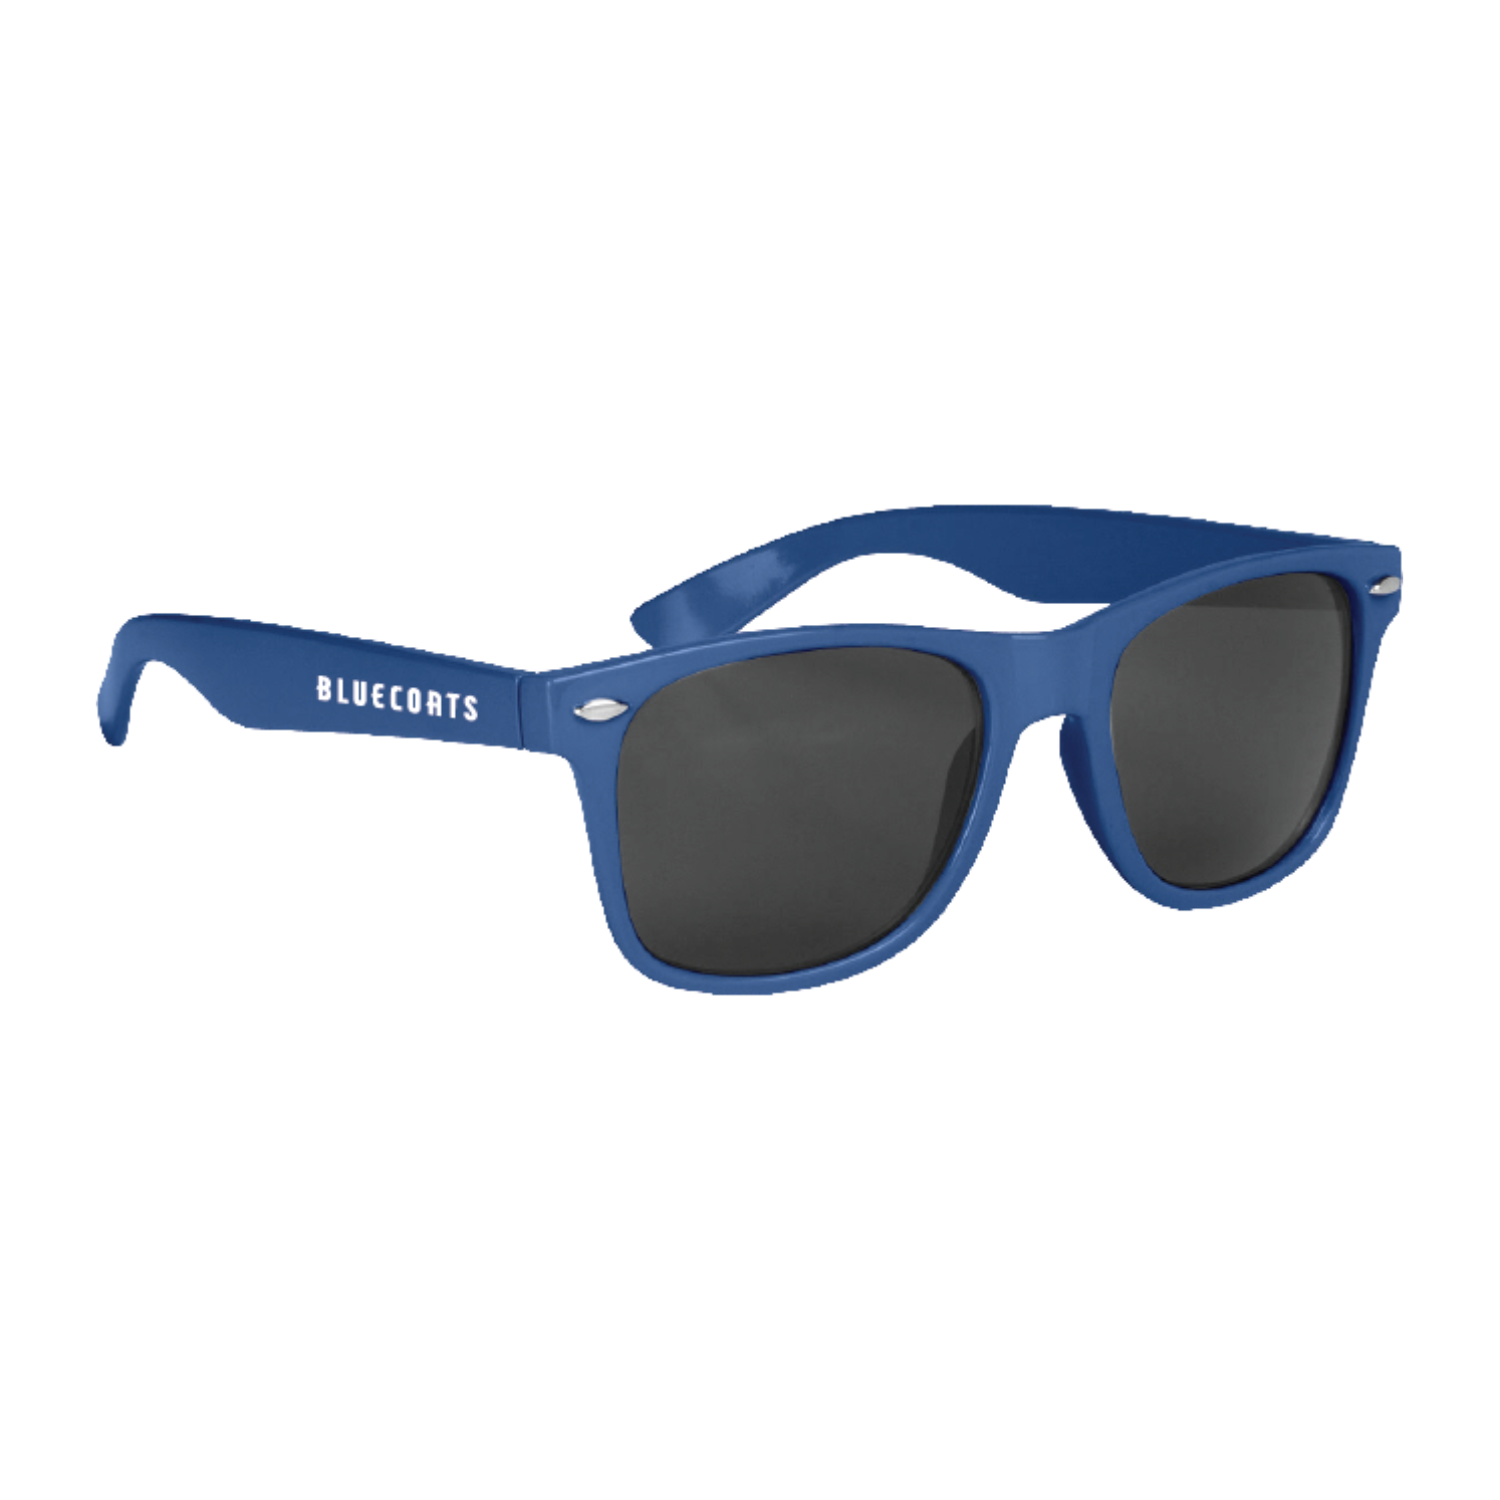 Blue Sunglasses | Bluecoats